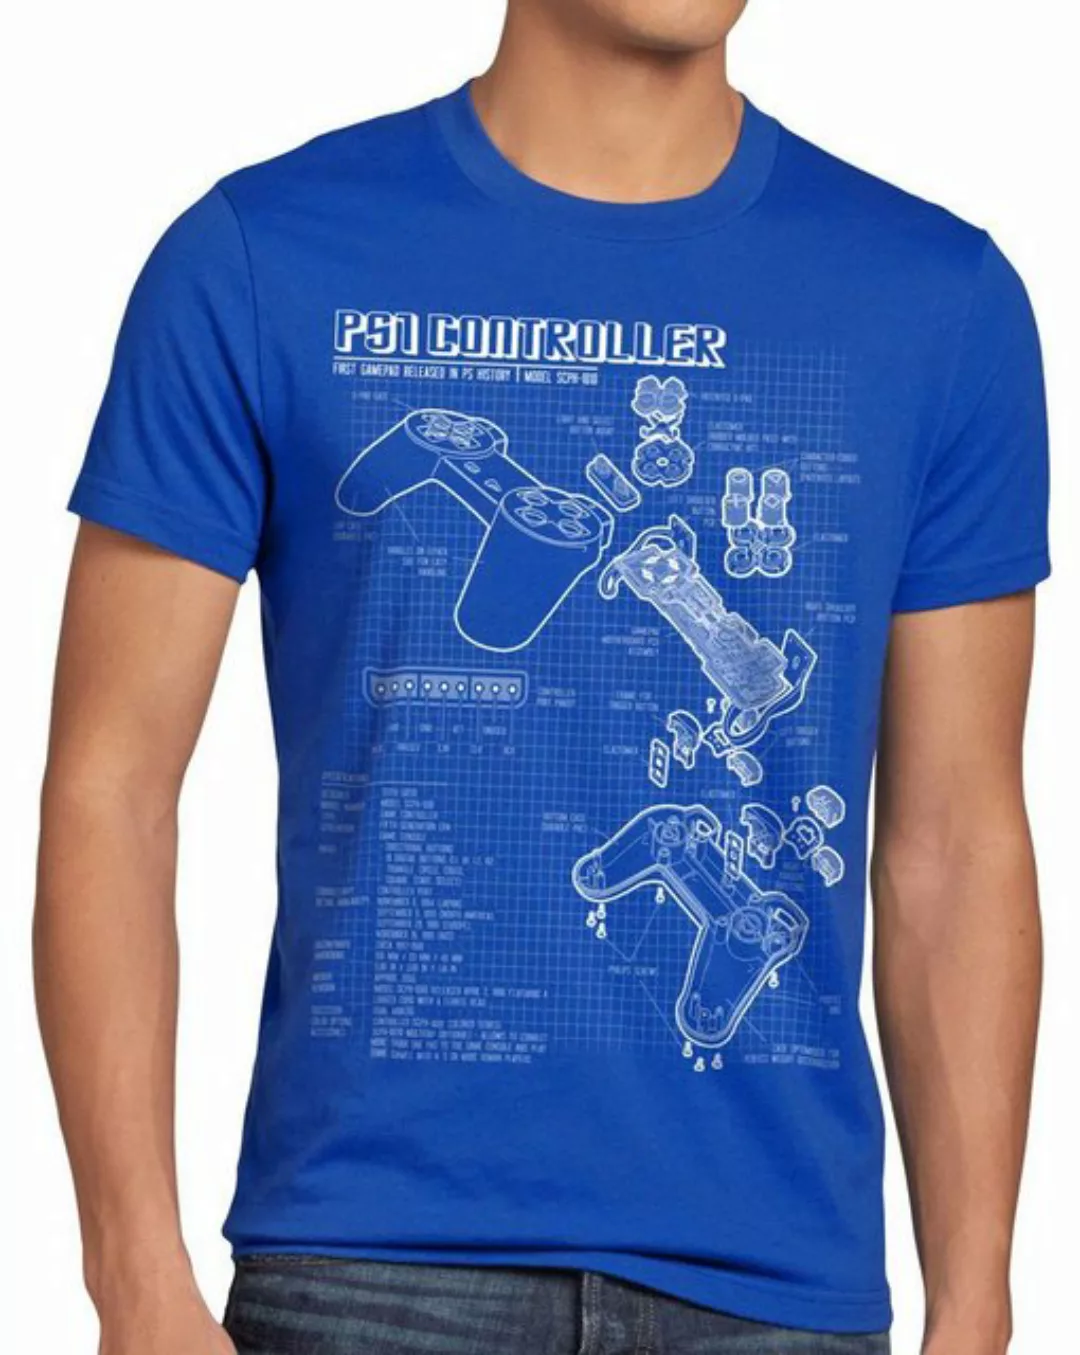 style3 Print-Shirt Herren T-Shirt PS1 Controller Blaupause PS gamepad konso günstig online kaufen